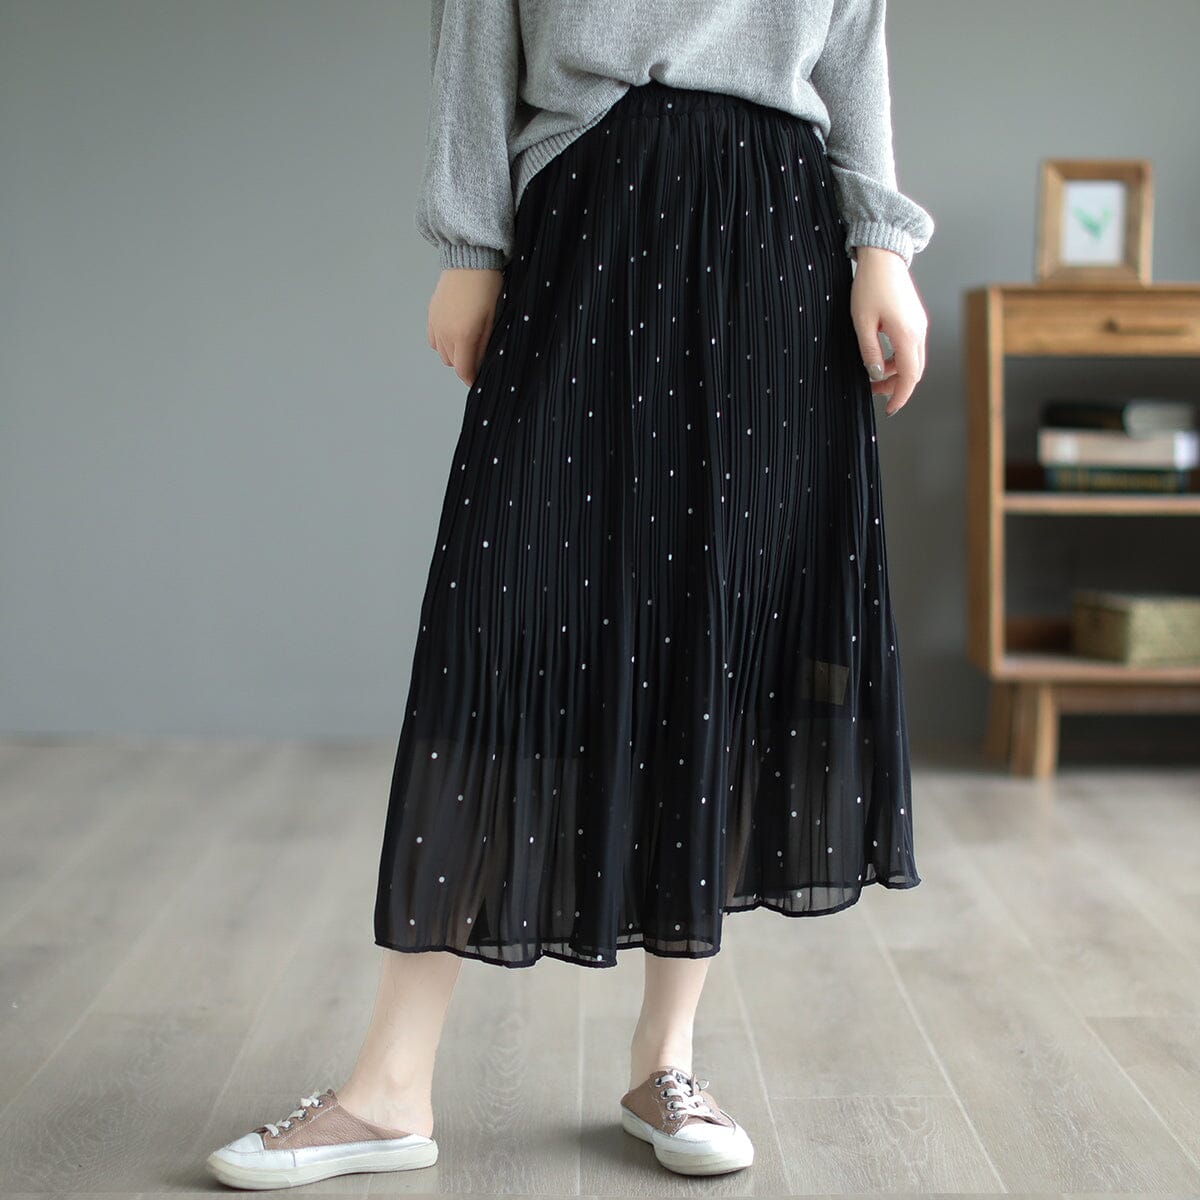 Women Summer Loose Casual Dots Skirts